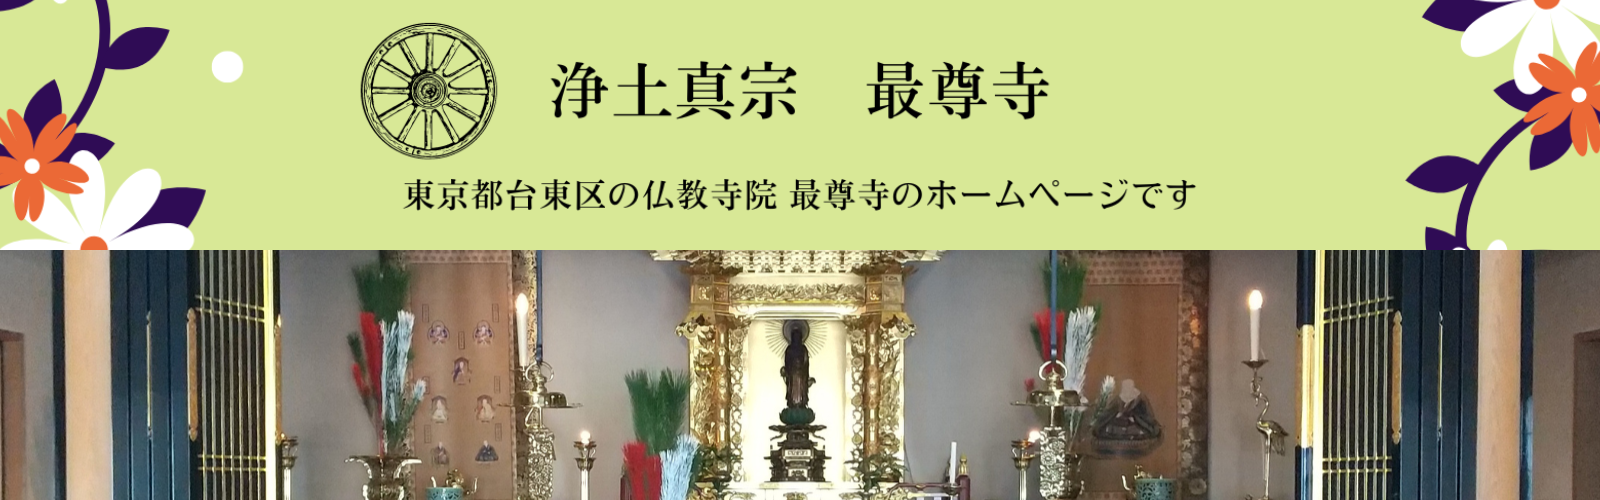 浄土真宗 最尊寺のホームページ | 東京都台東区の仏教寺院